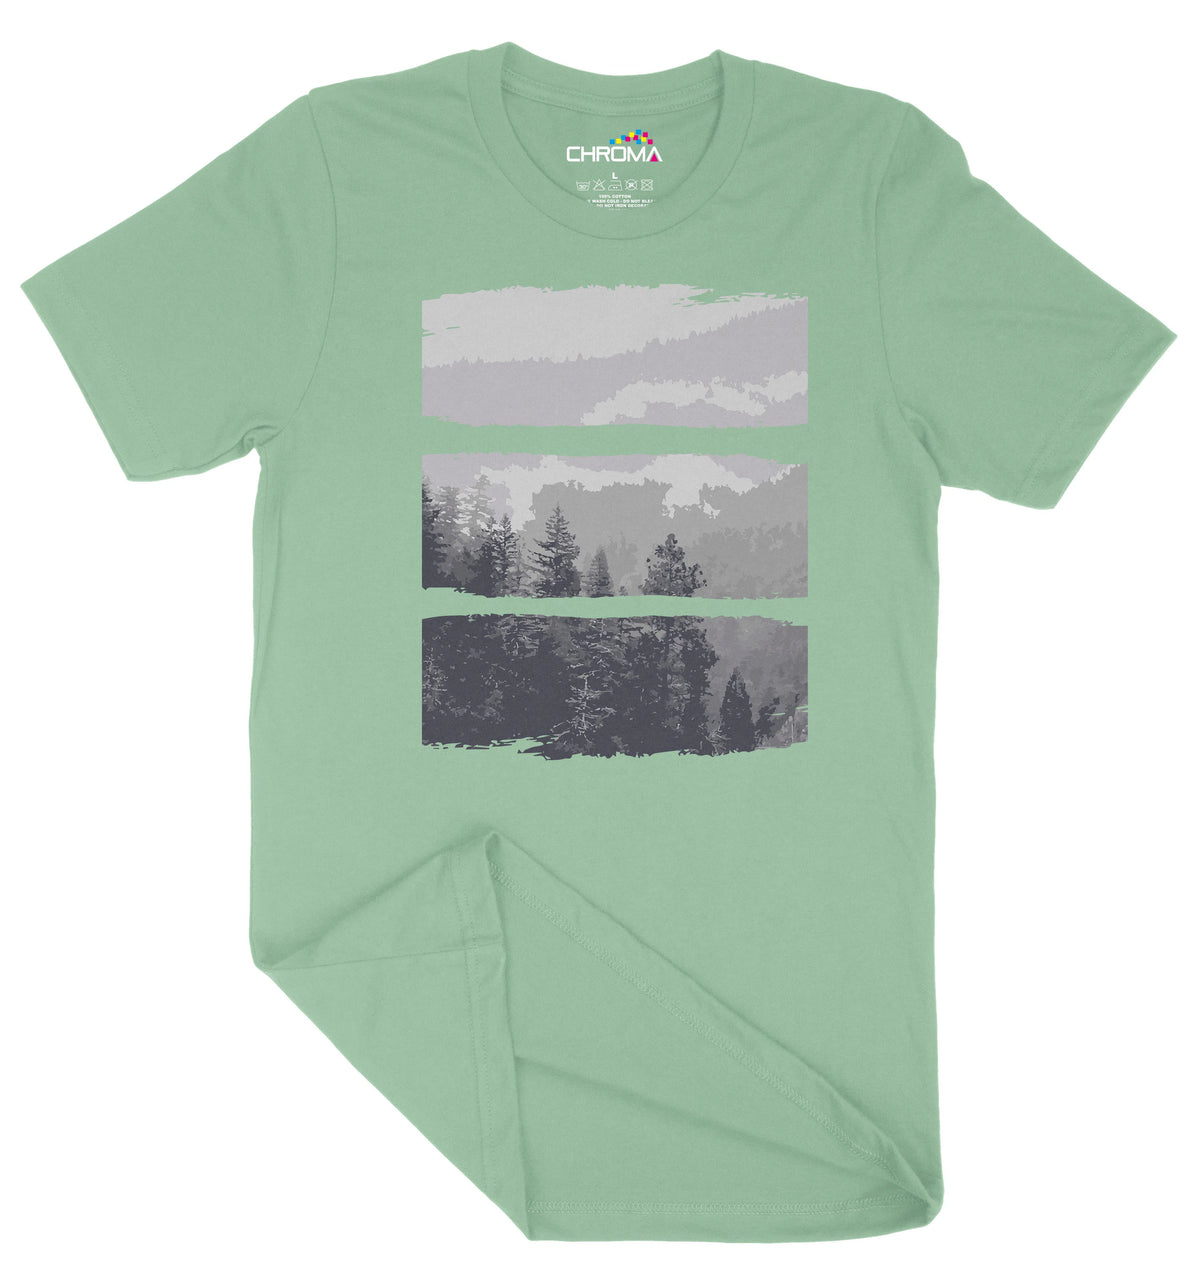 Monochrome Forest Unisex Adult T-Shirt | Premium Quality Streetwear Chroma Clothing